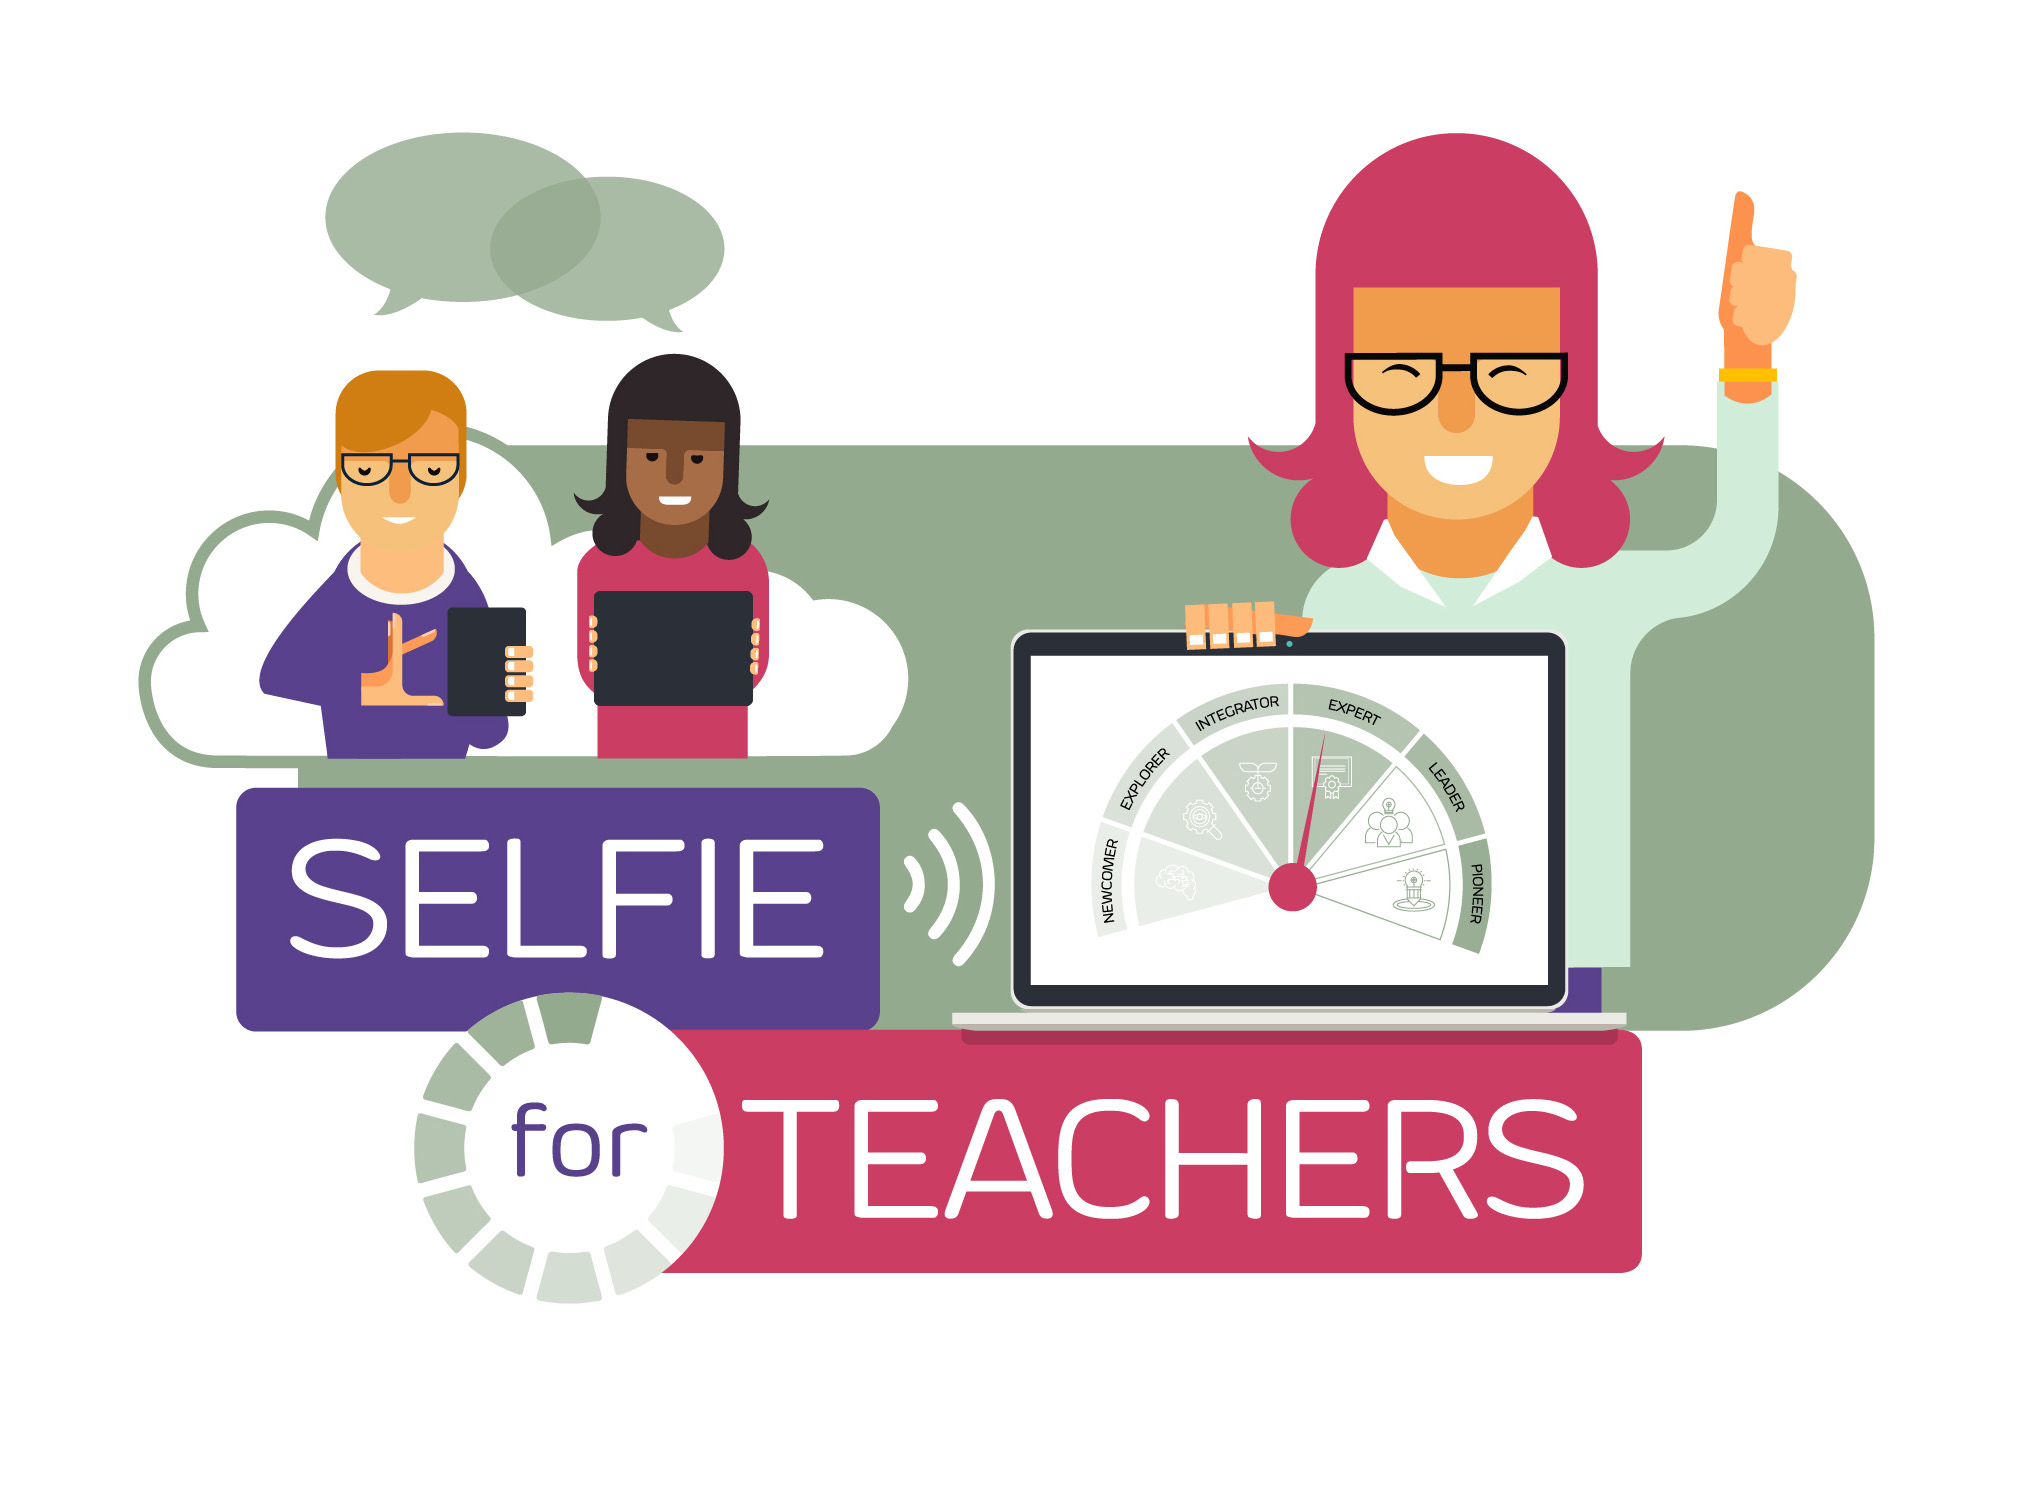 https://educators-go-digital.jrc.ec.europa.eu/resources/images/Selfie4Teachers.png